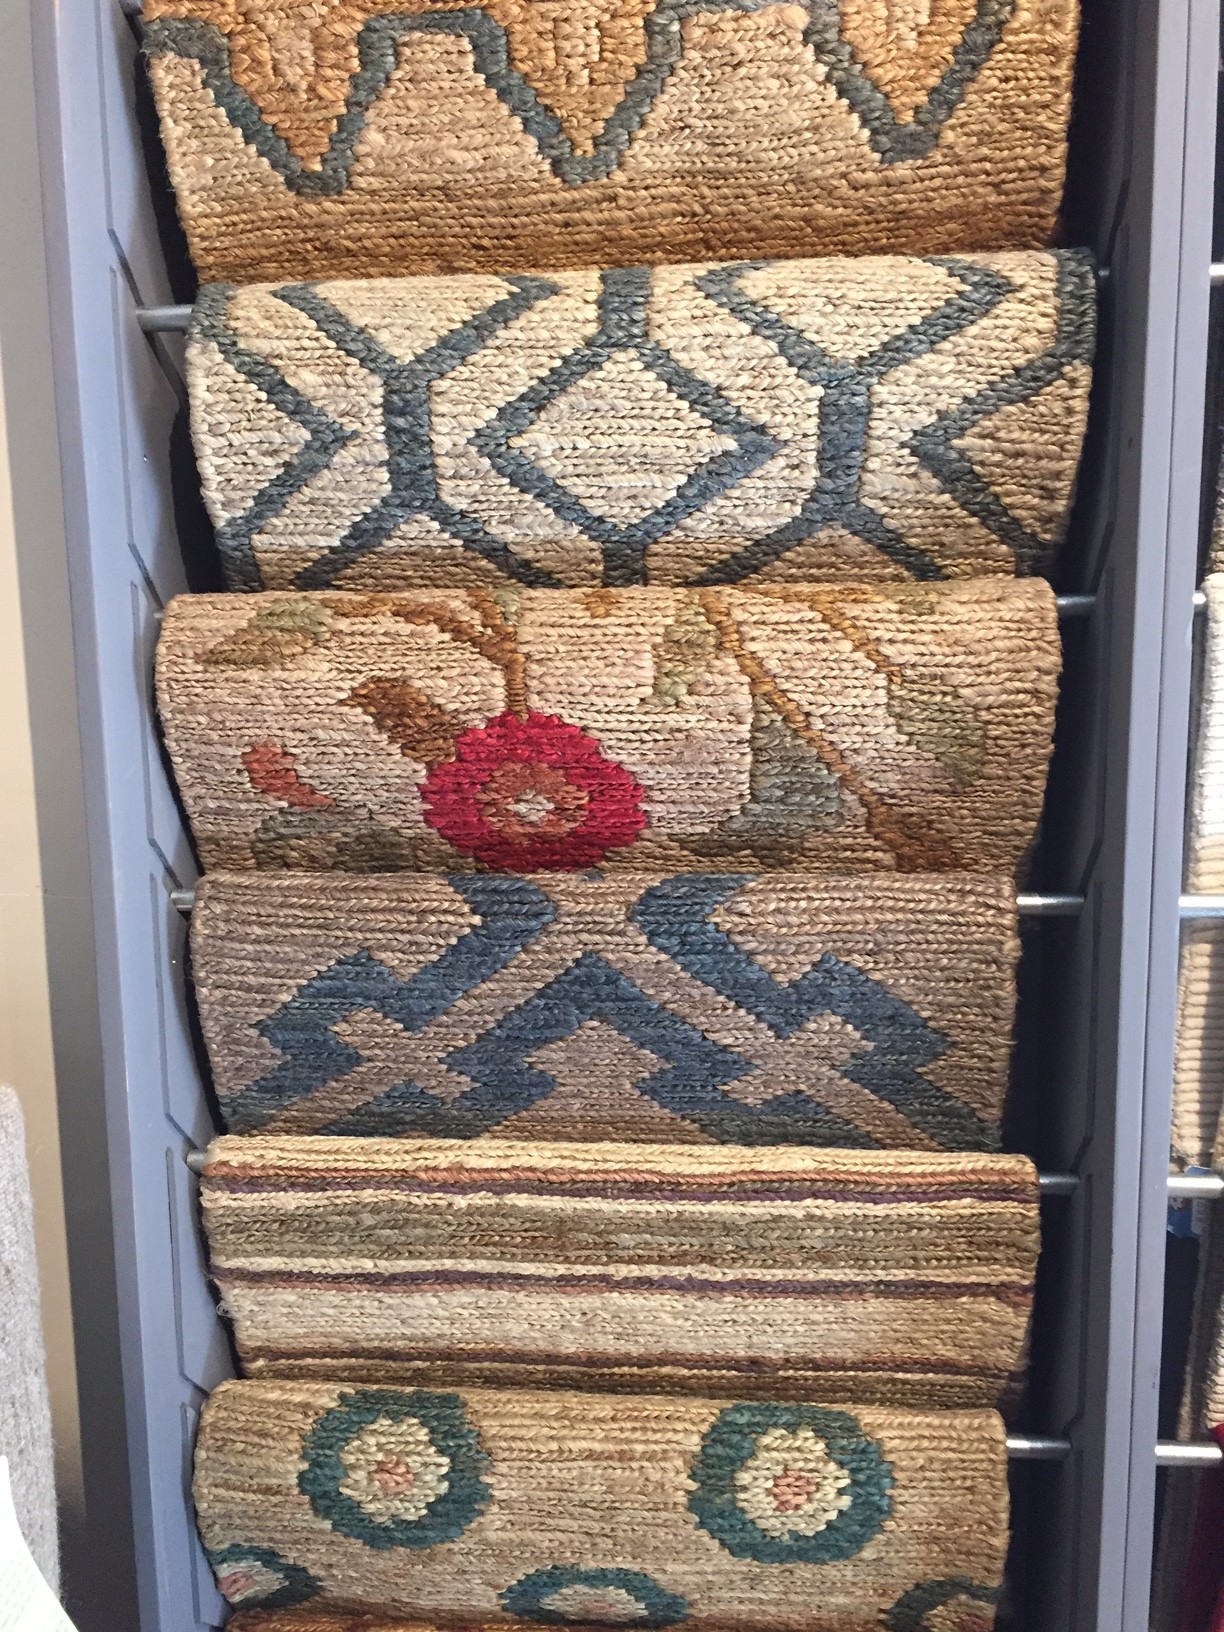 Hemp Carpets - all natural fibers!